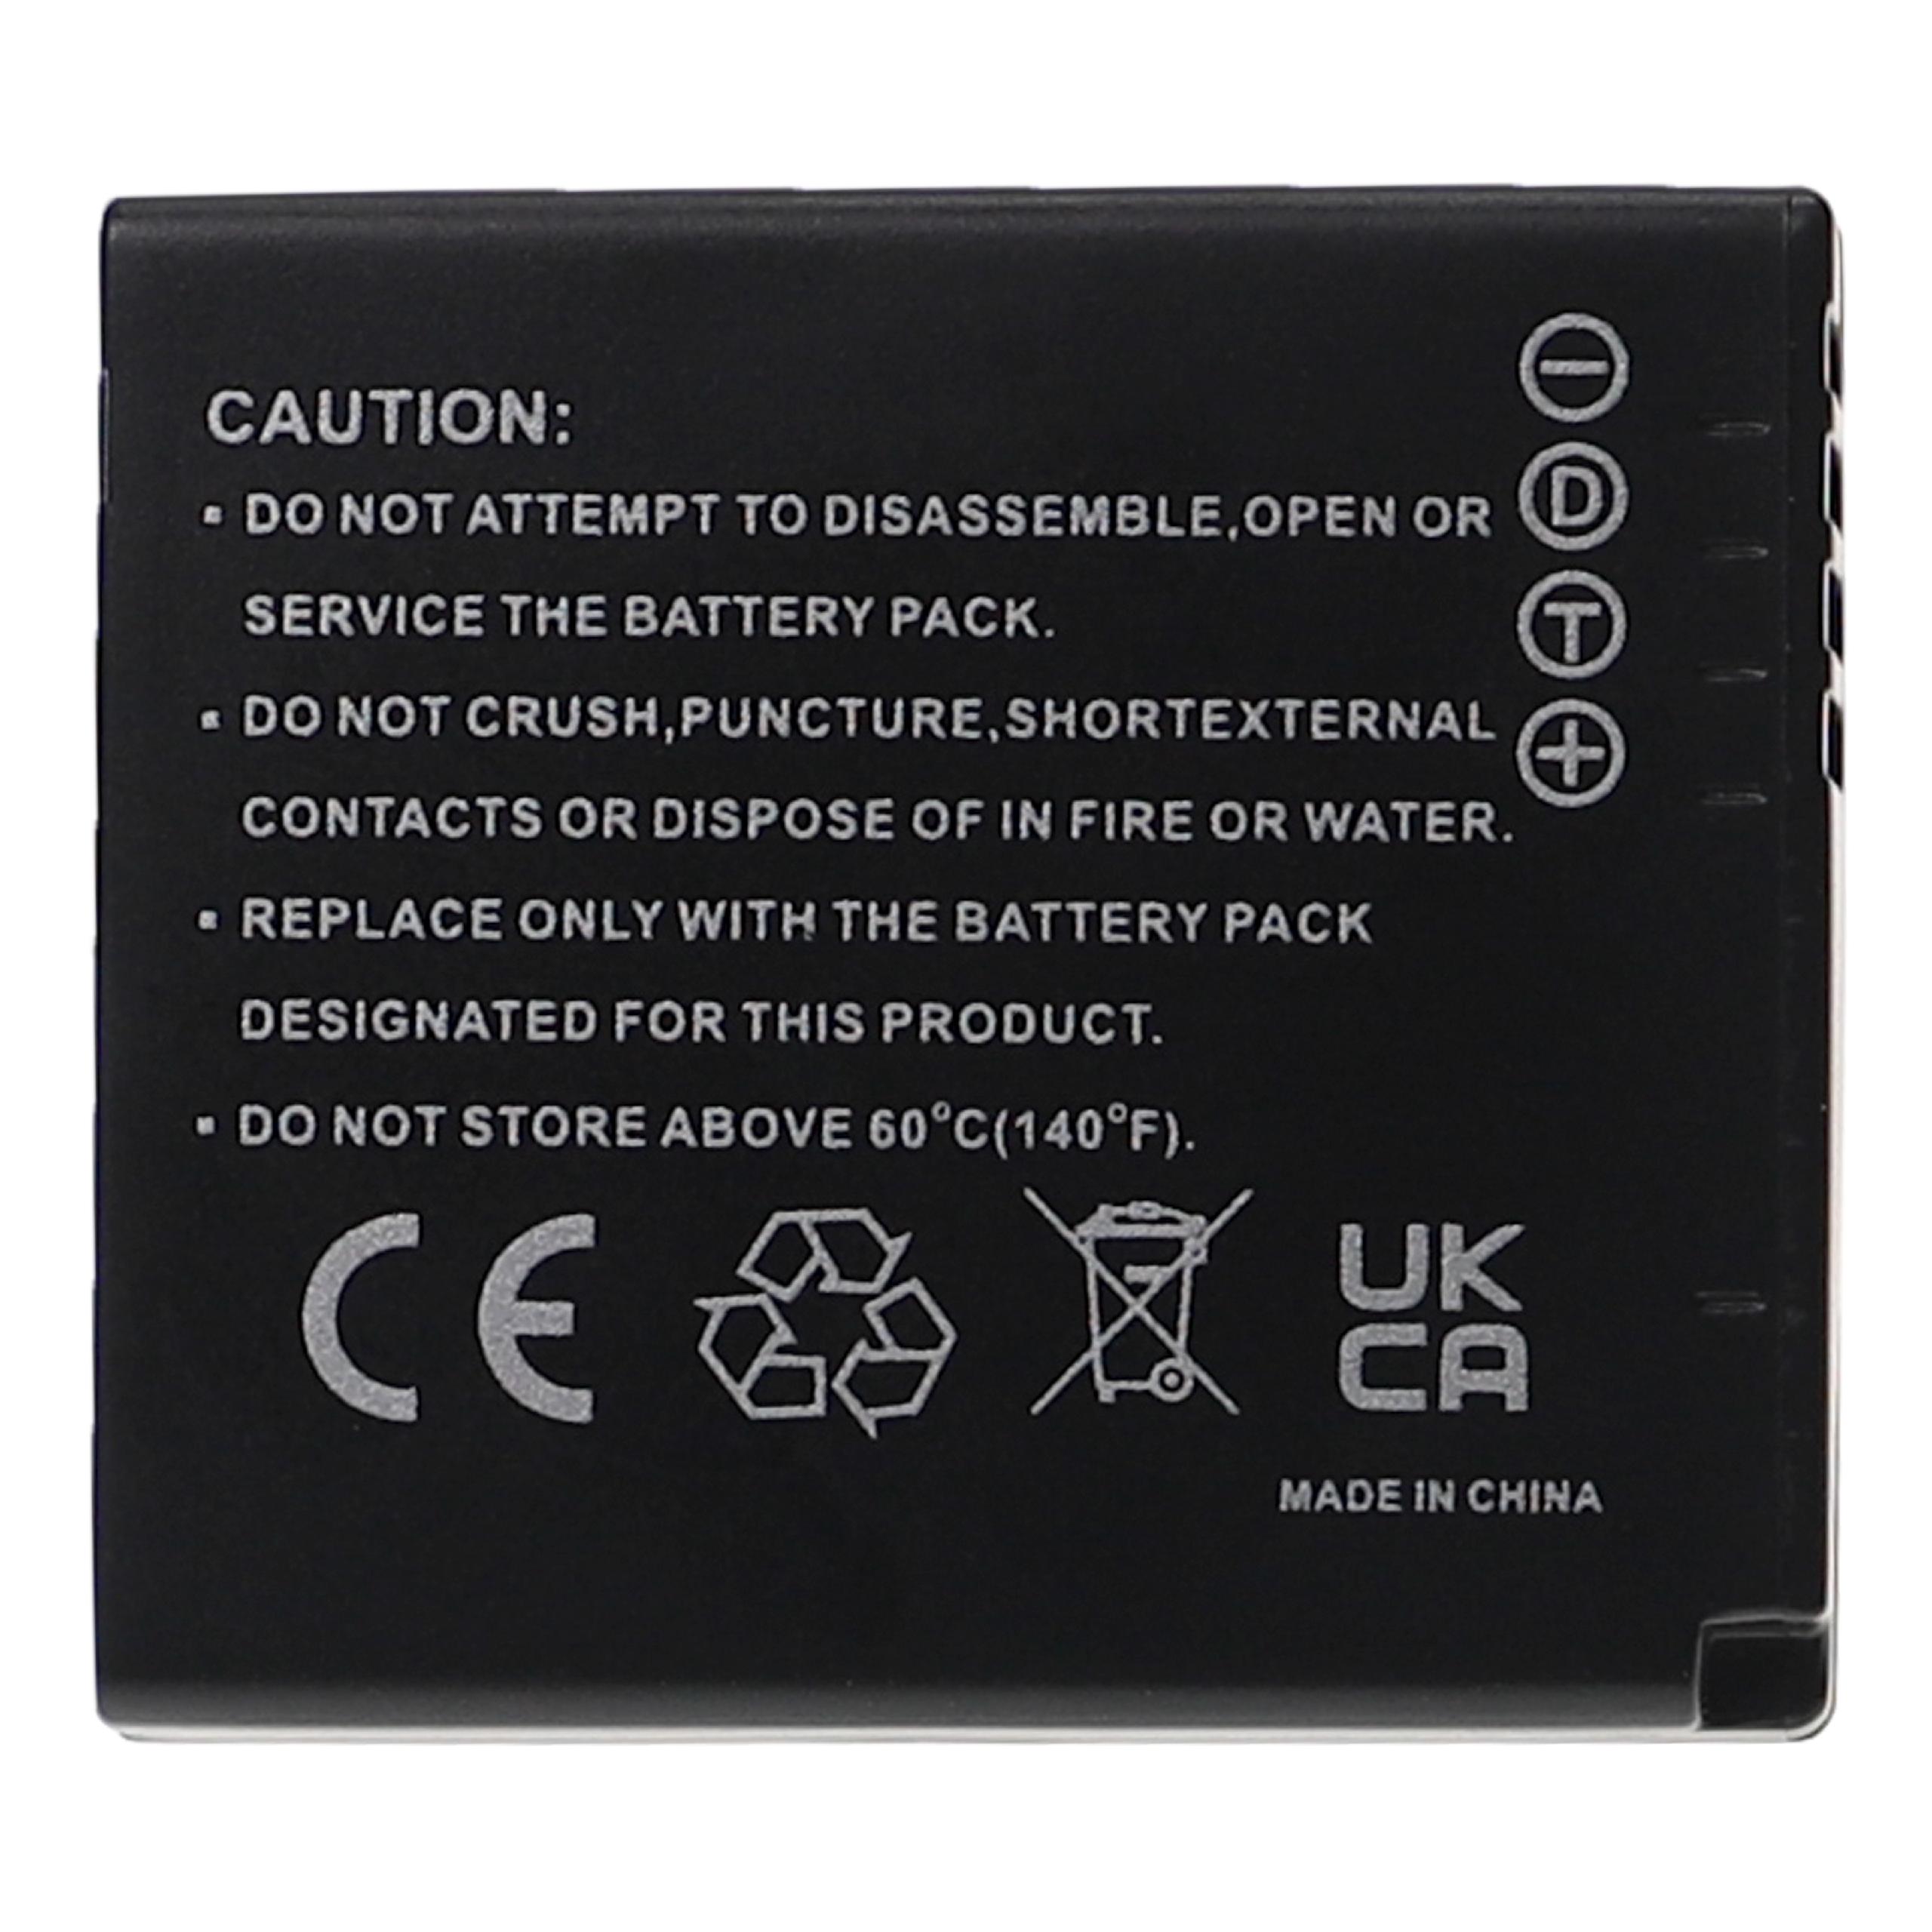 Battery Replacement for Panasonic CGA-S009E, CGA-S/106B, CGA-S/106C, CGA-S009 - 1000mAh, 3.7V, Li-Ion